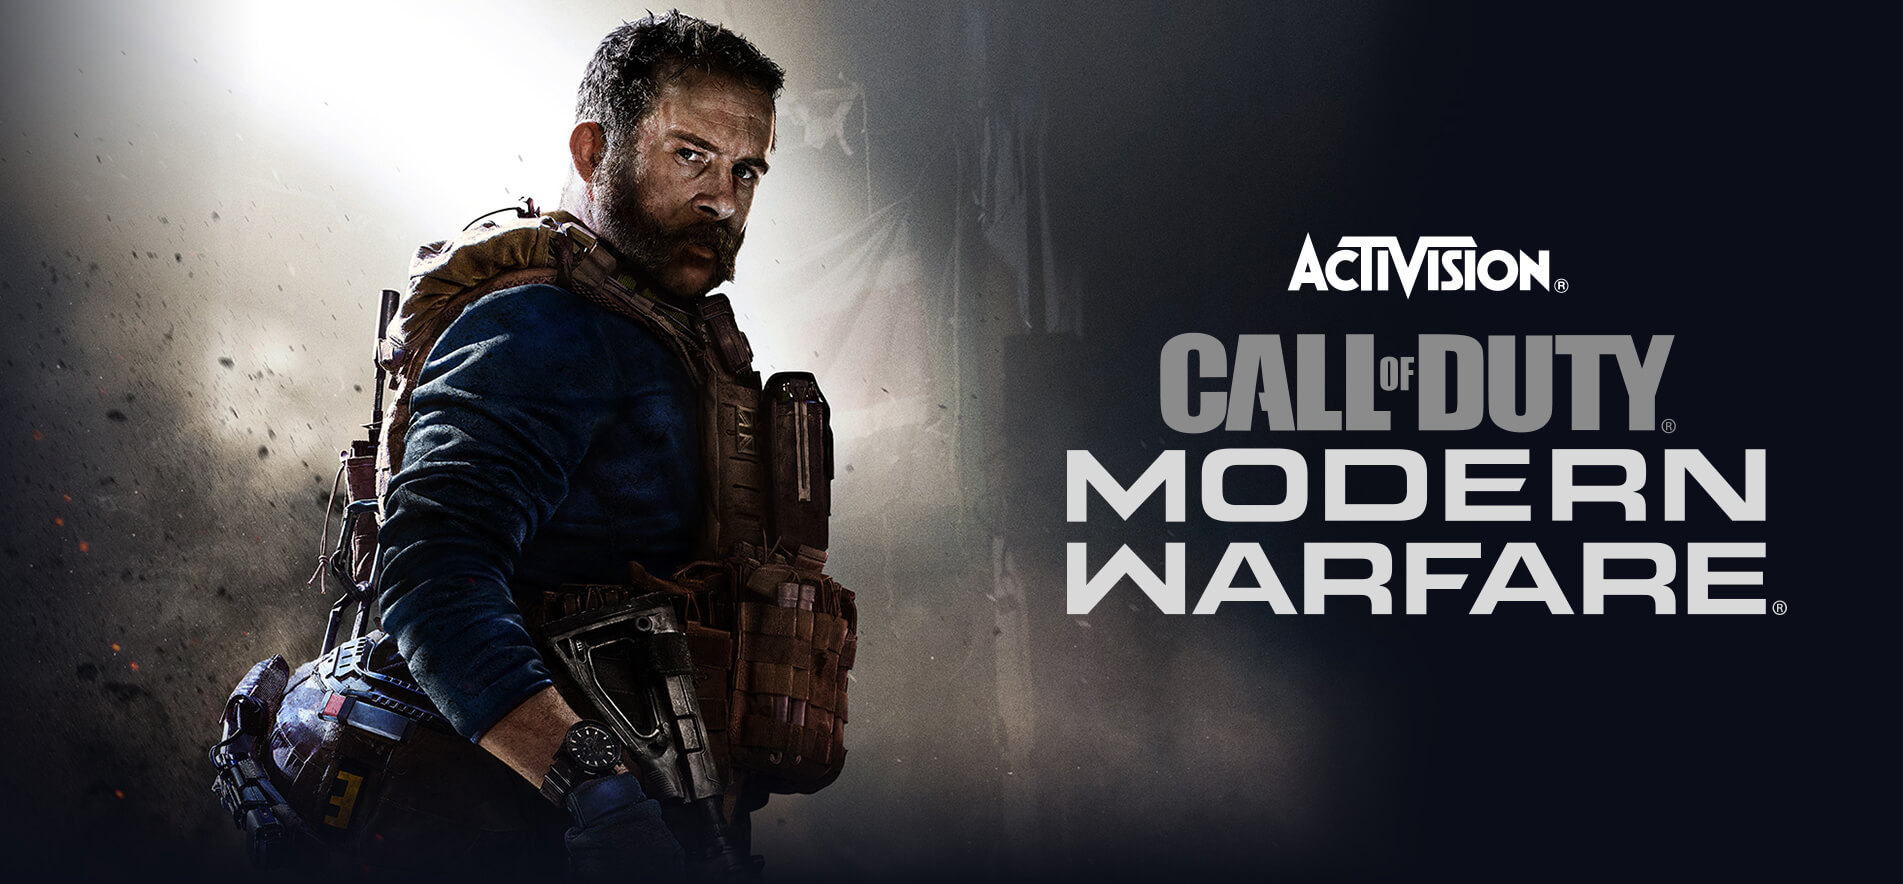 Call of Duty: Modern Warfare официально анонсирована (трейлер) (фото)